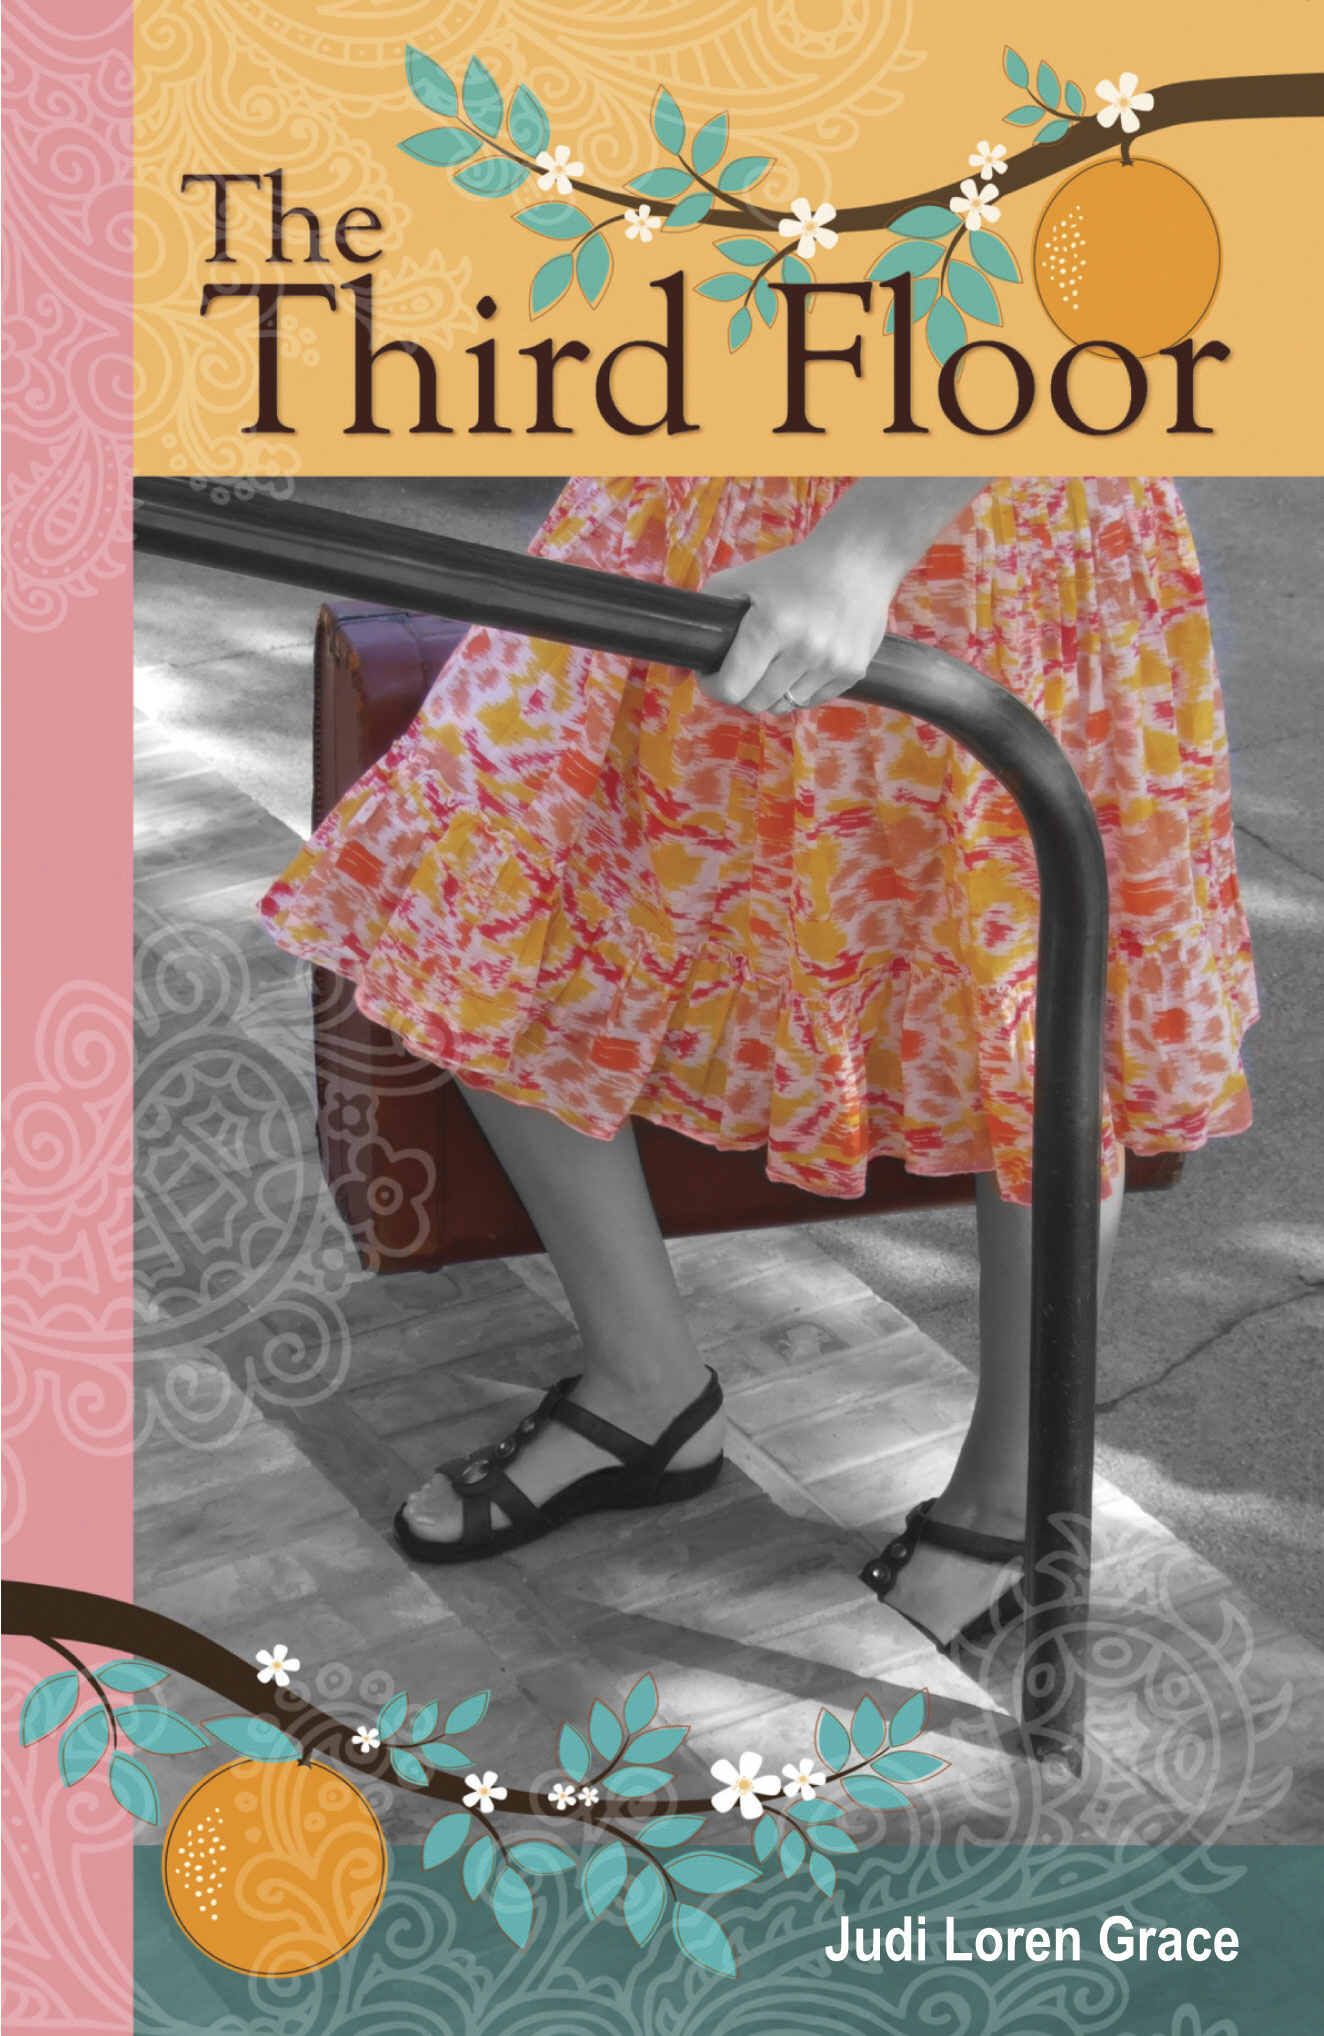 Click to order The Third Floor by Judi Loren Grace